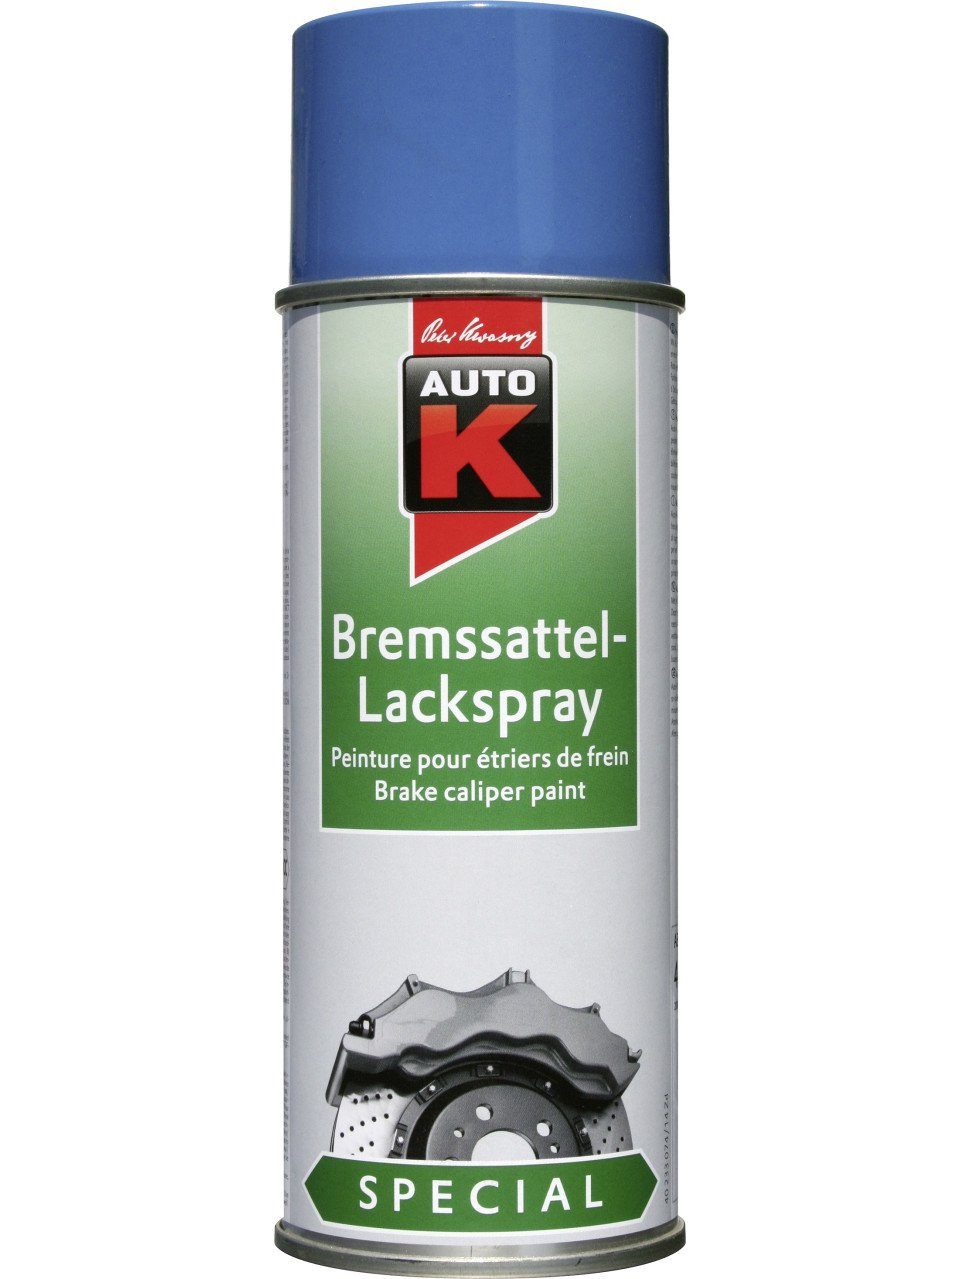 Bremssattel Special Auto-K Auto-K 400ml Sprühlack blau Lackspray